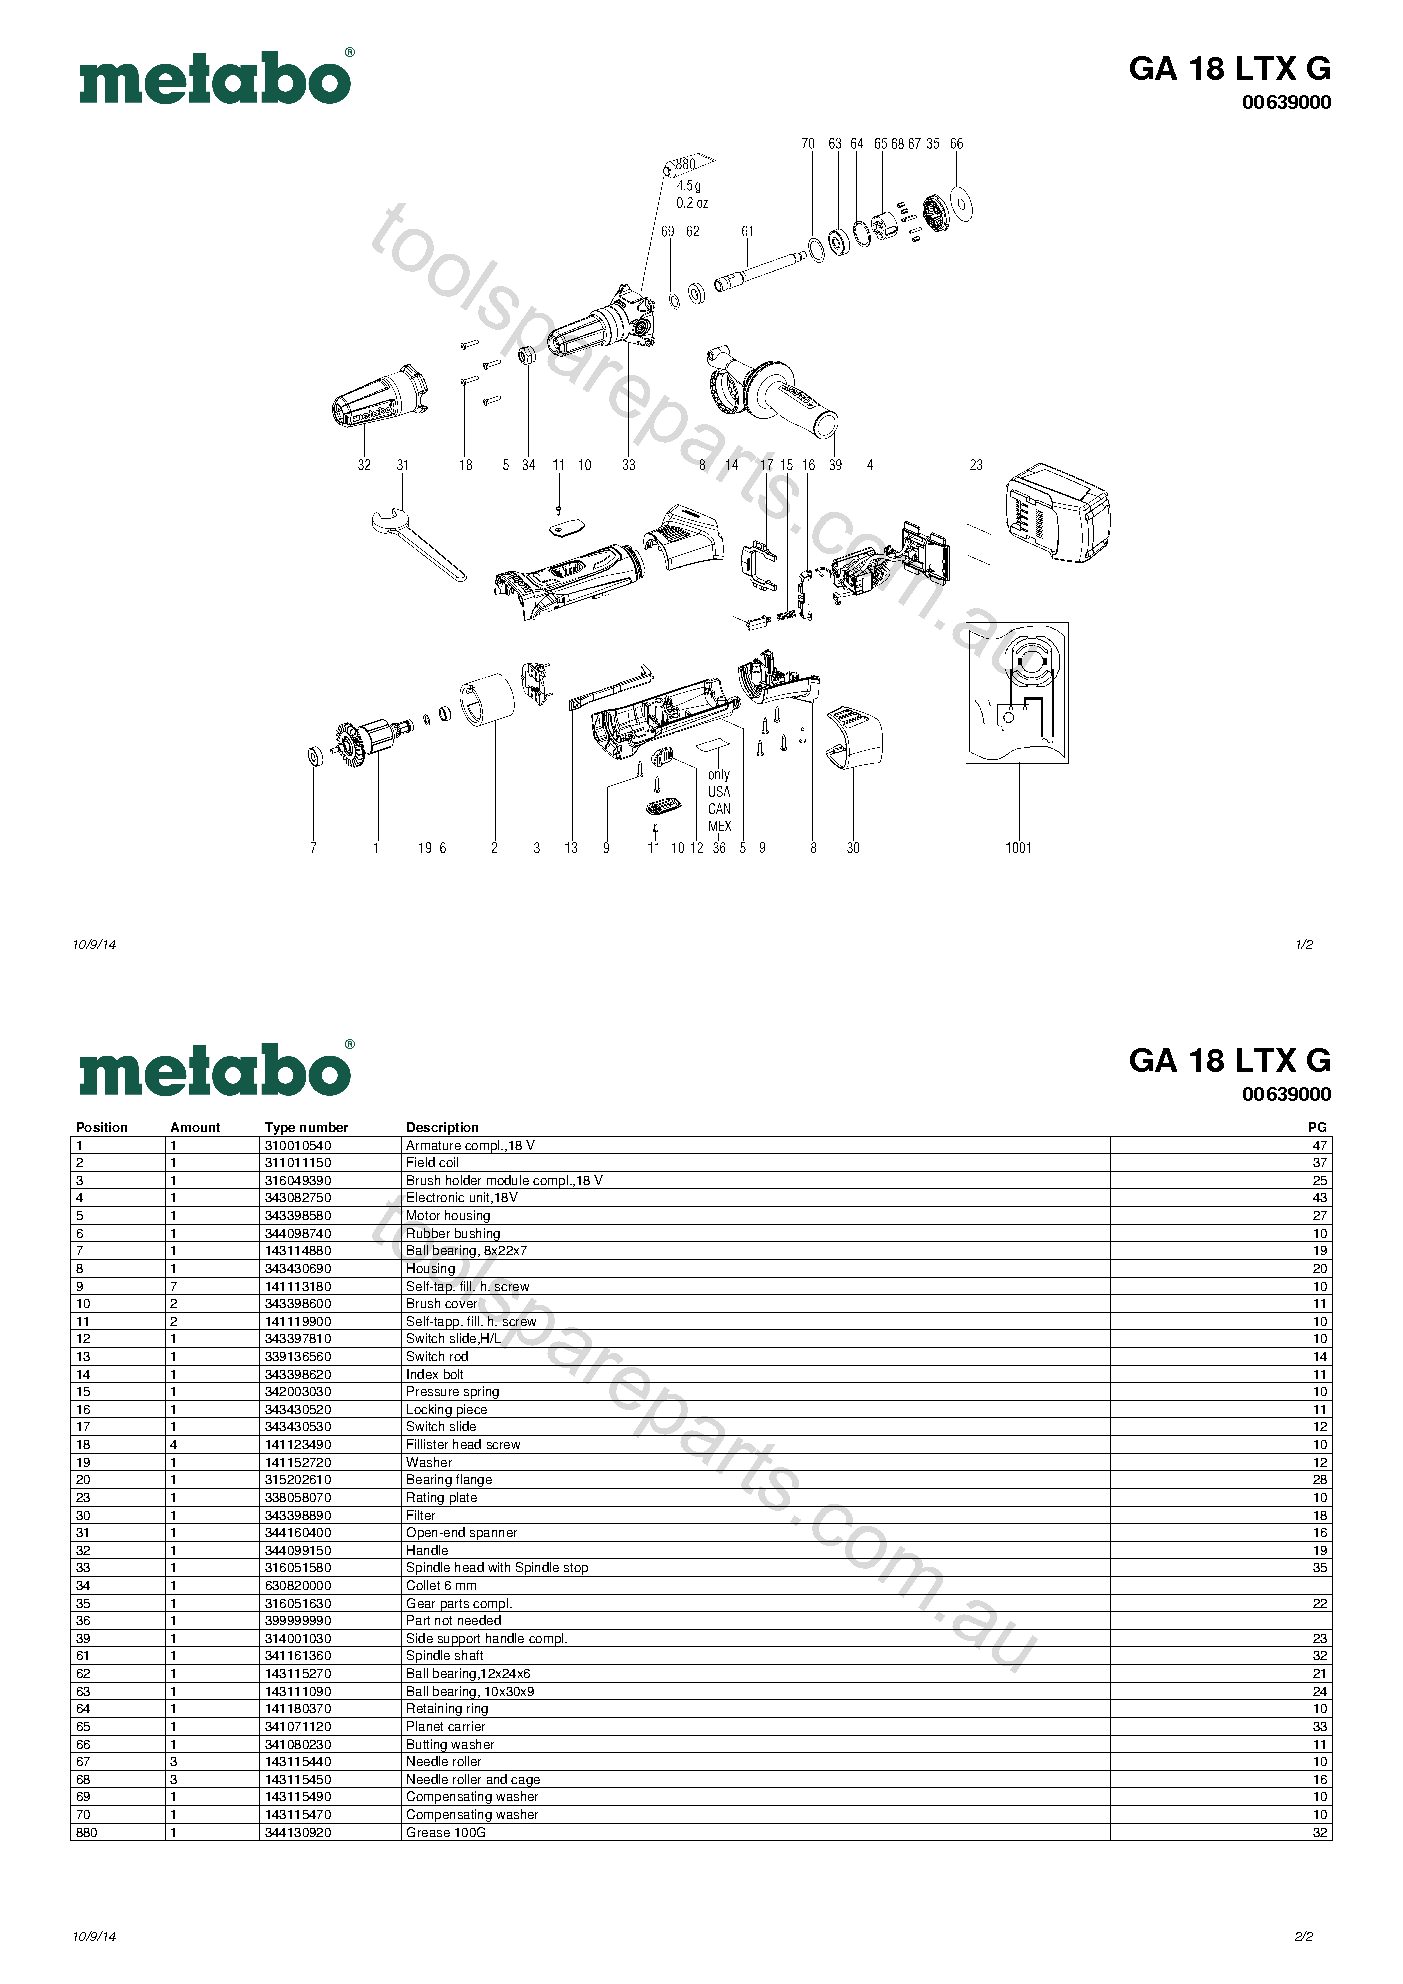 Metabo GA 18 LTX G 00639000  Diagram 1